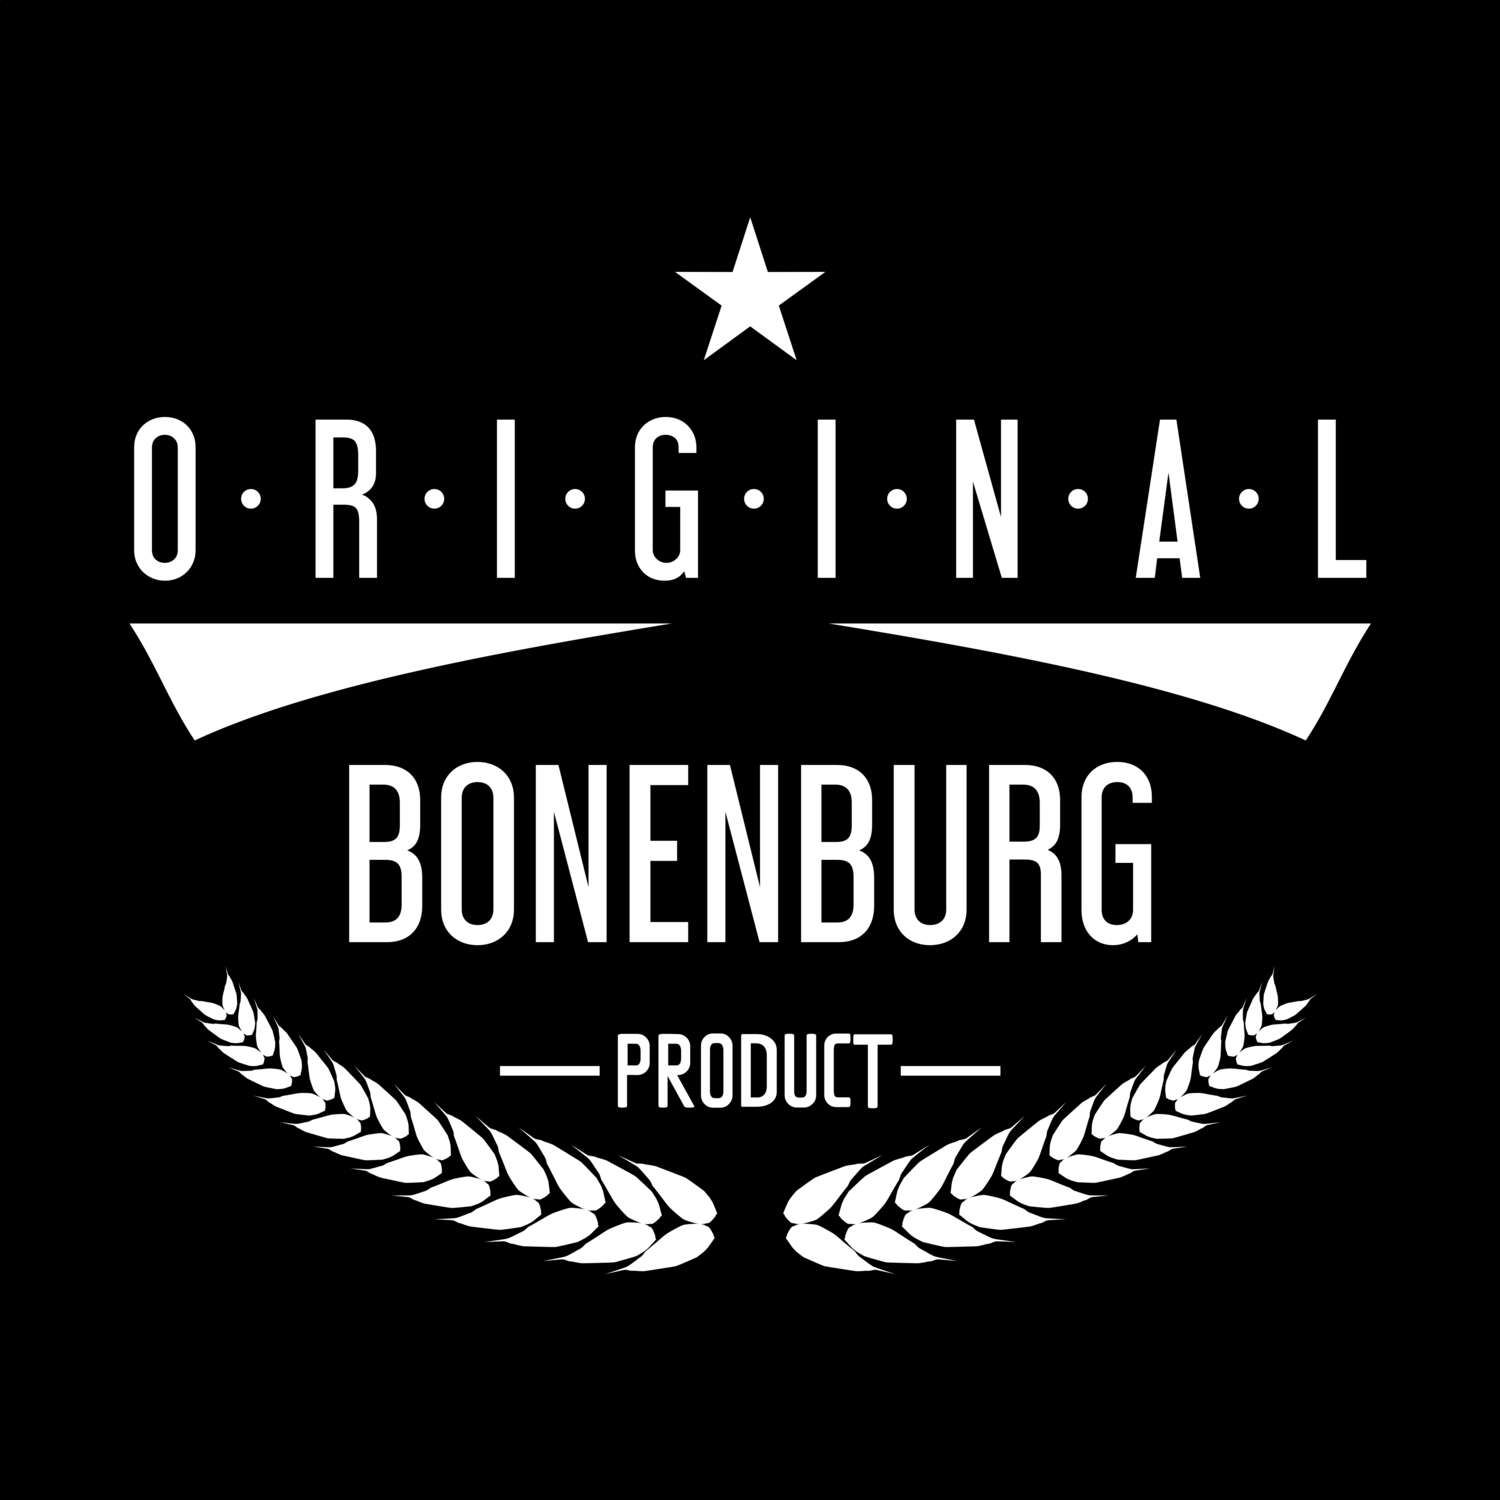 Bonenburg T-Shirt »Original Product«